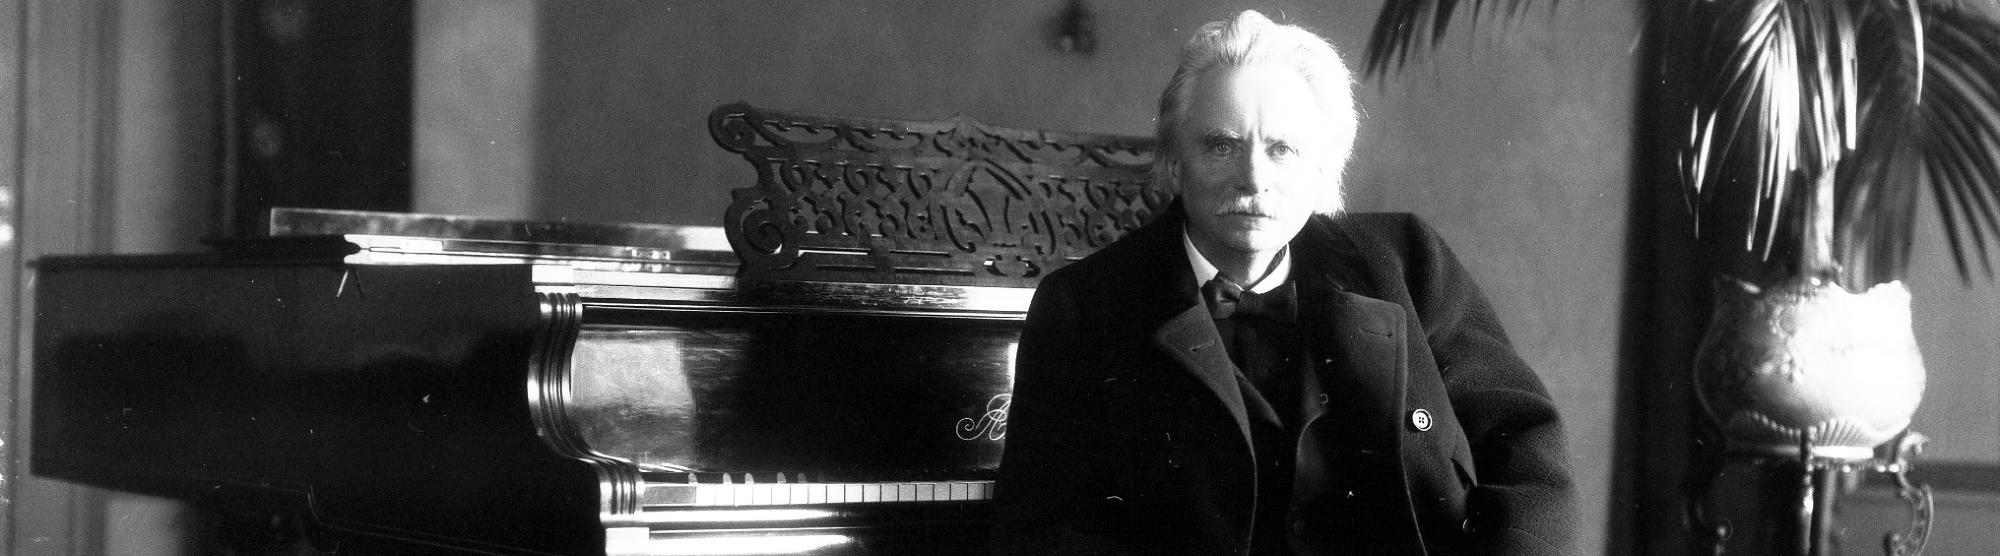 Edvard Grieg the composer